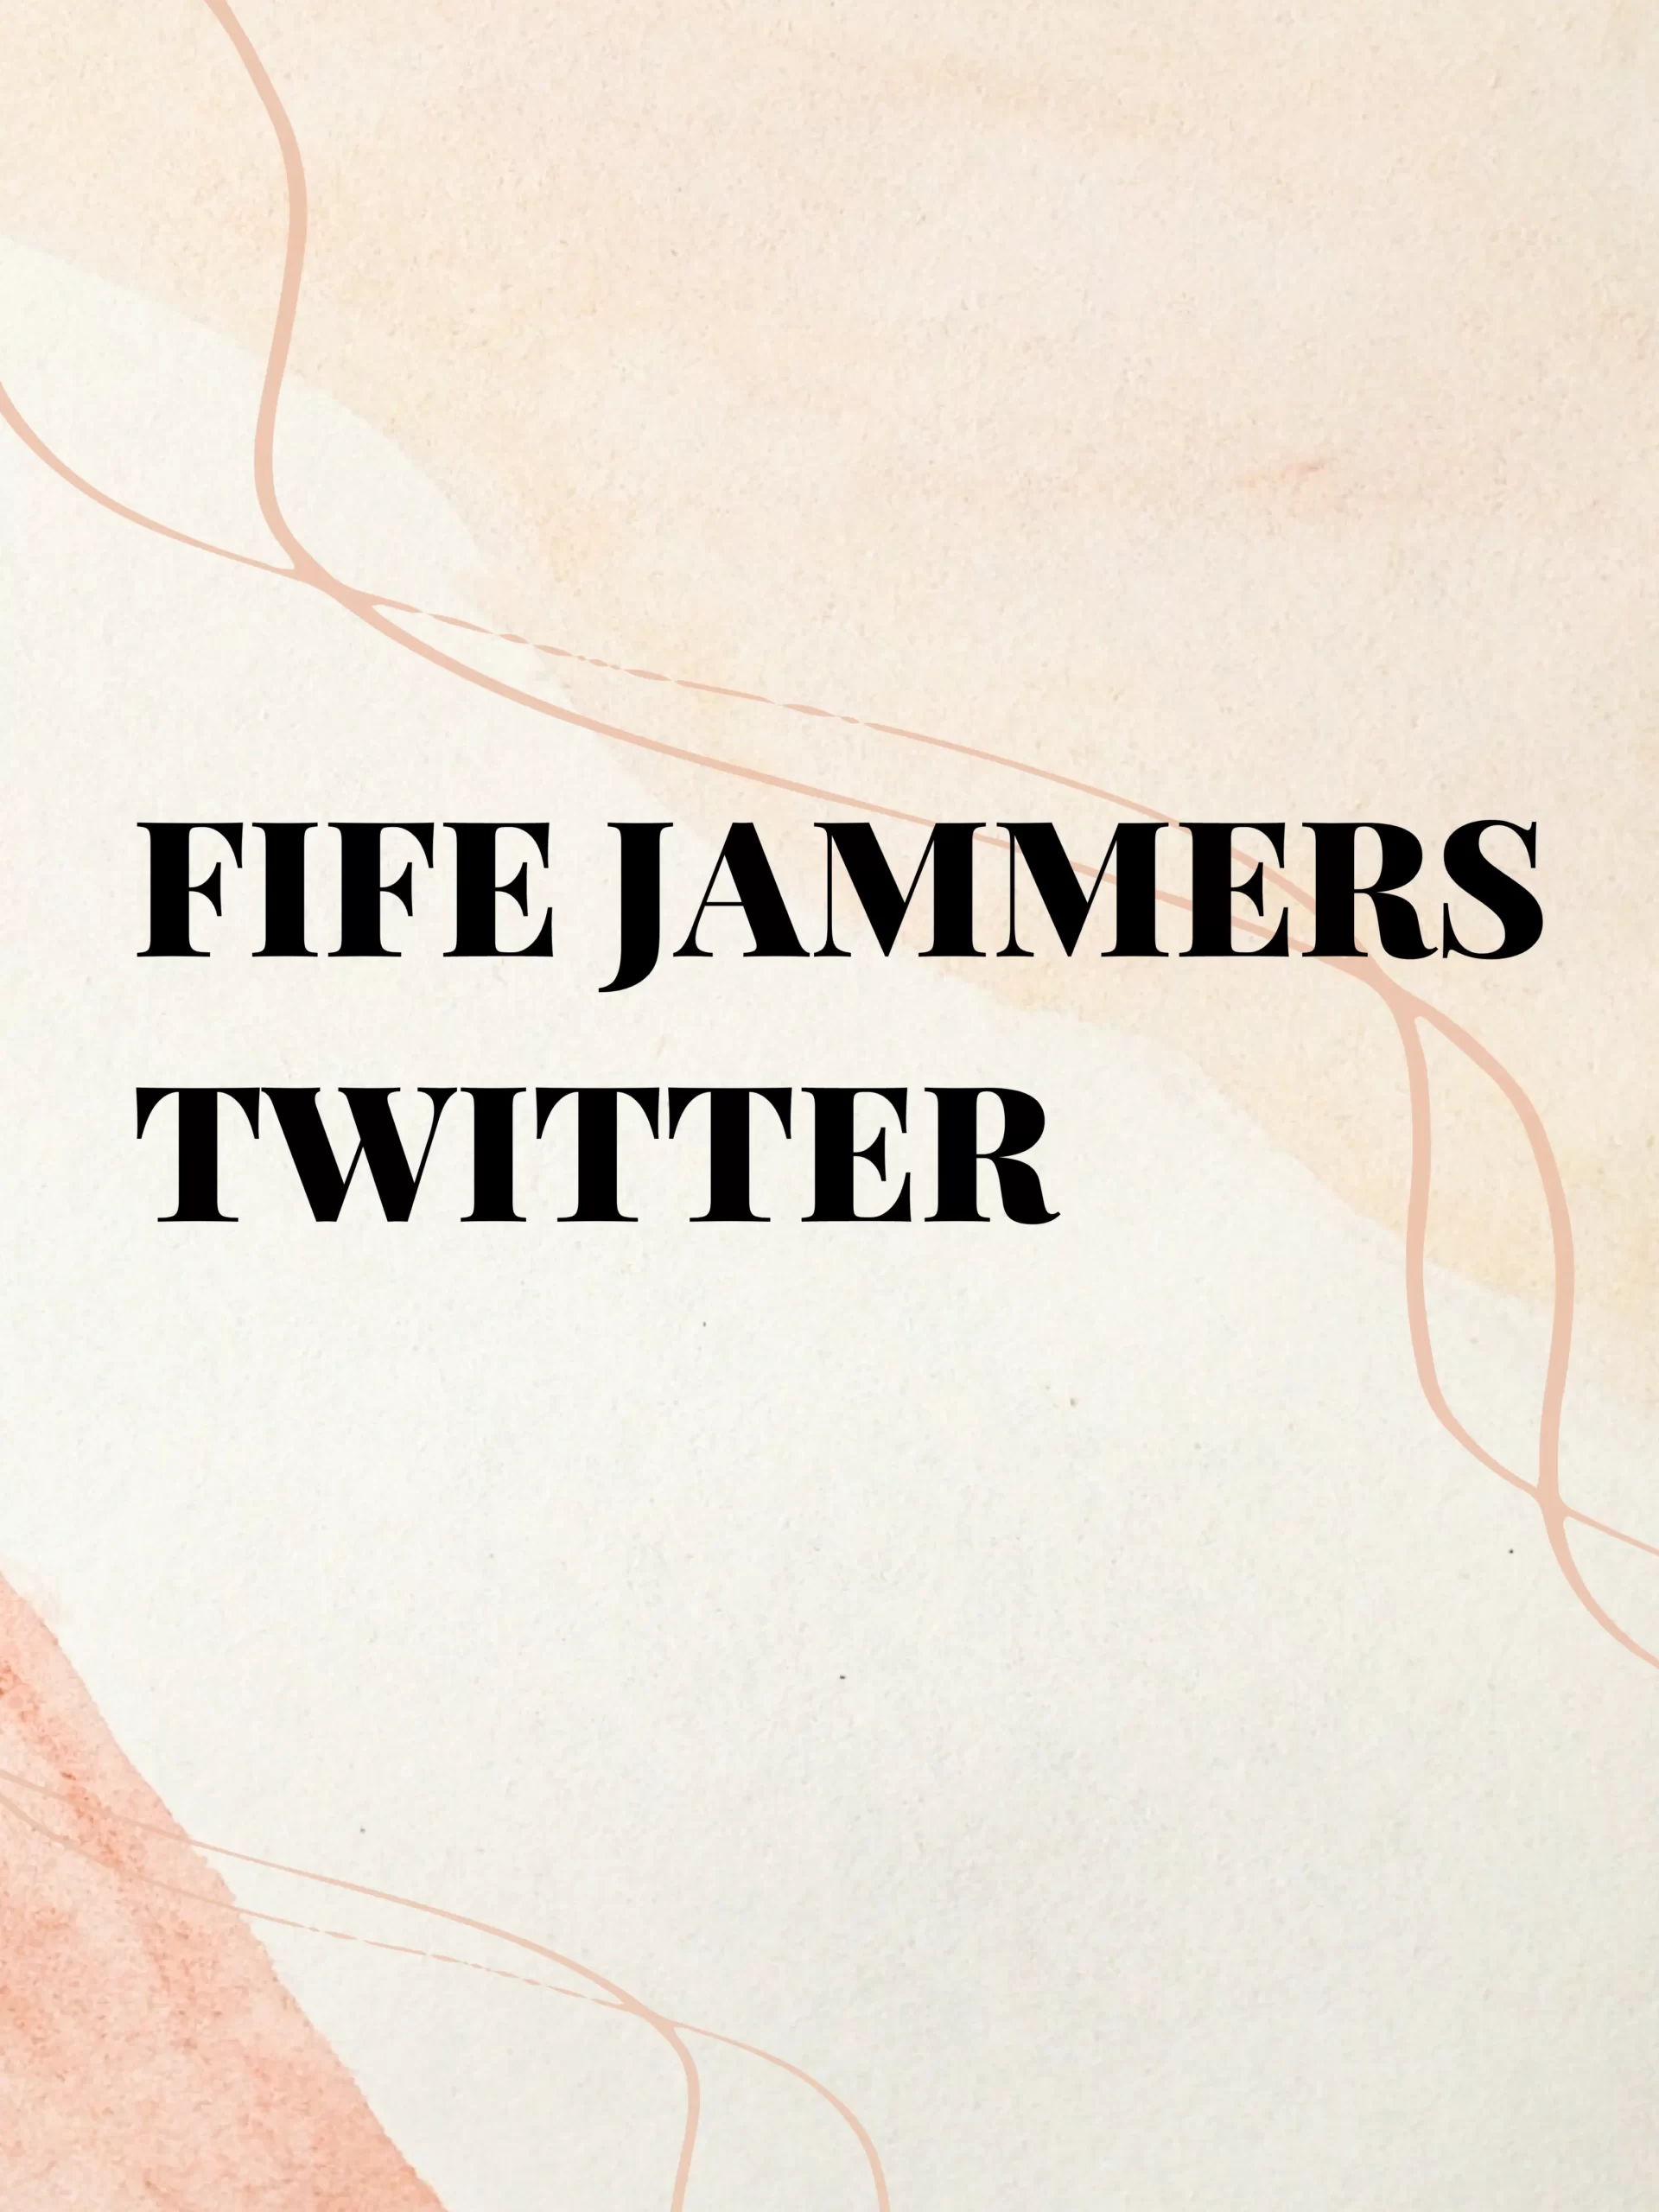 Fife Jammers Twitter